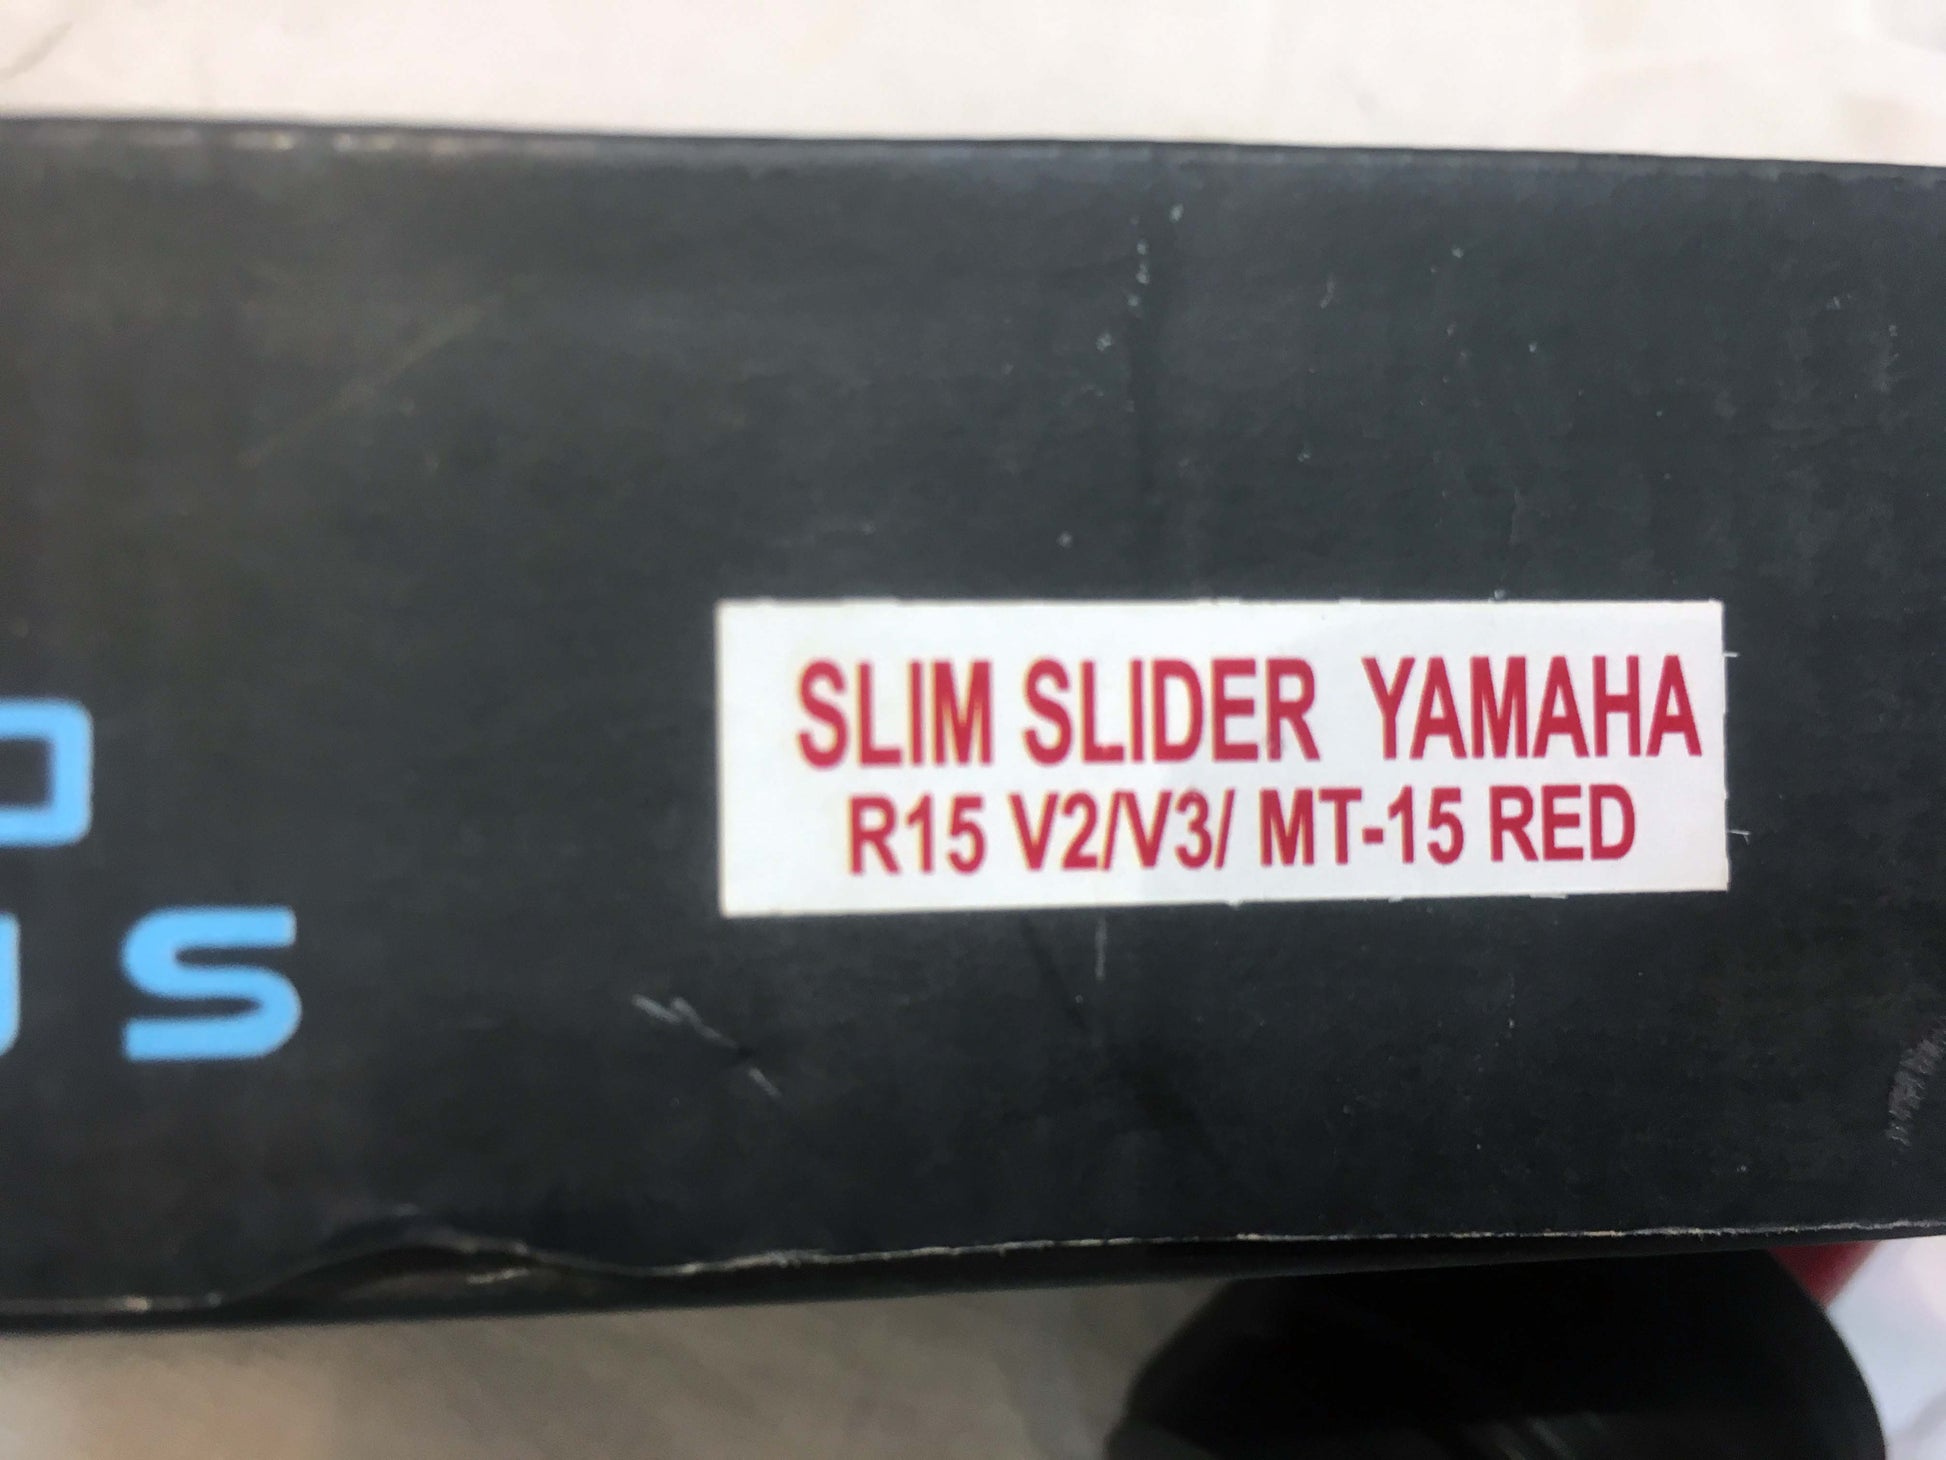 Yamaha Logo Heavy R15 V3 Frame Slider (Red) - Premium Frame Sliders from Sparewick - Just Rs. 1499! Shop now at Sparewick